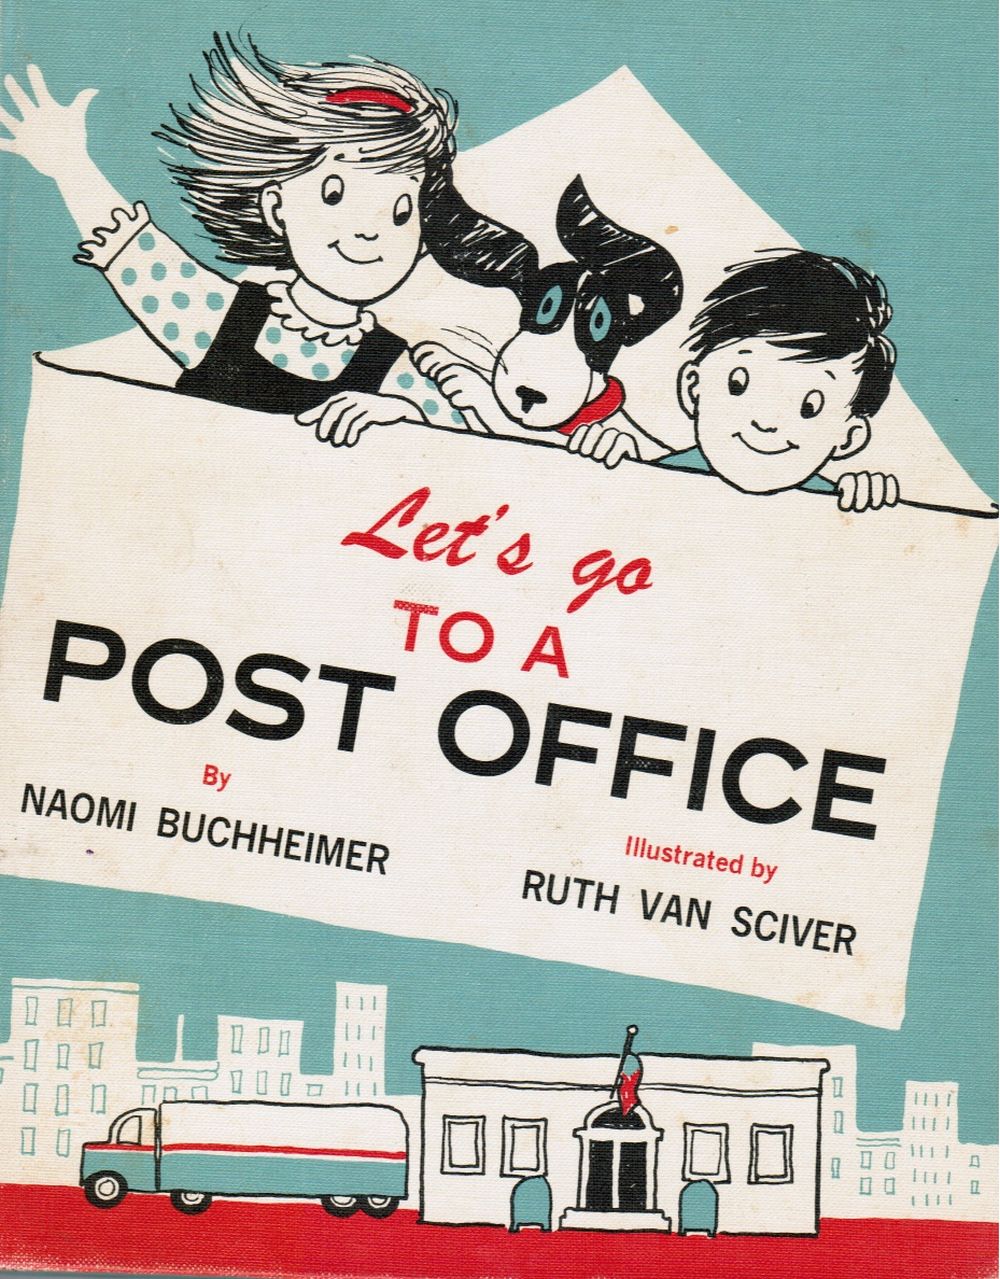 BUCHHEIMER, NAOMI - Let's Go to a Post Office